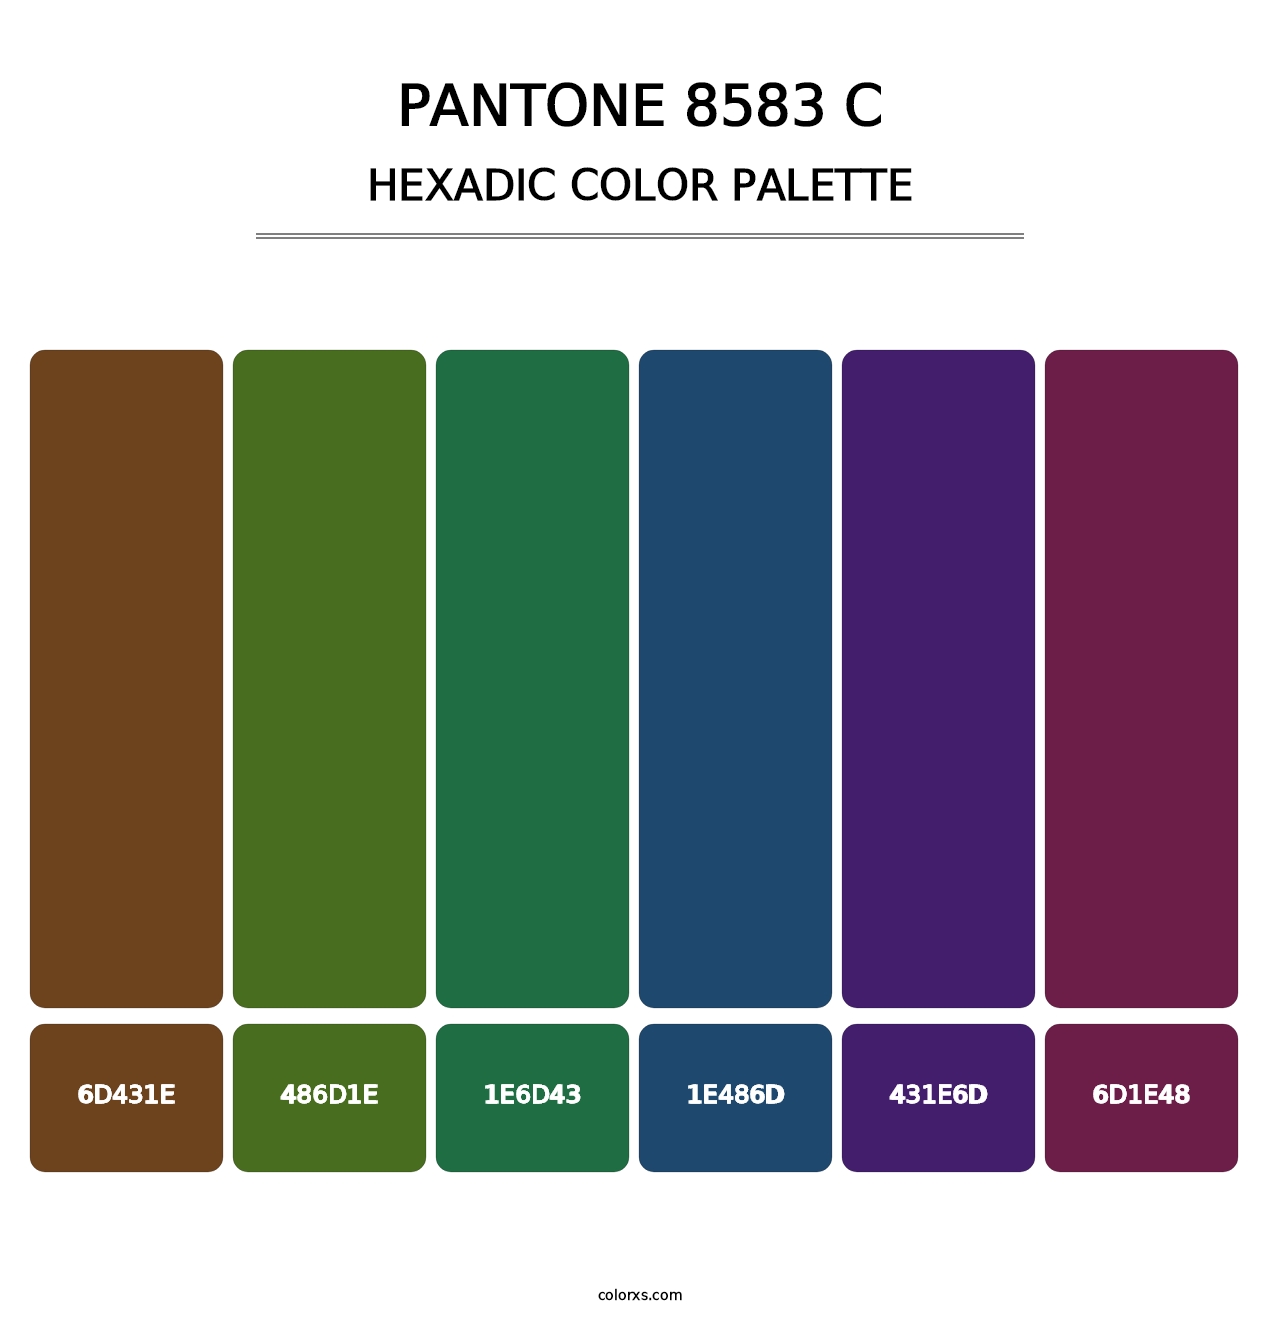 PANTONE 8583 C - Hexadic Color Palette